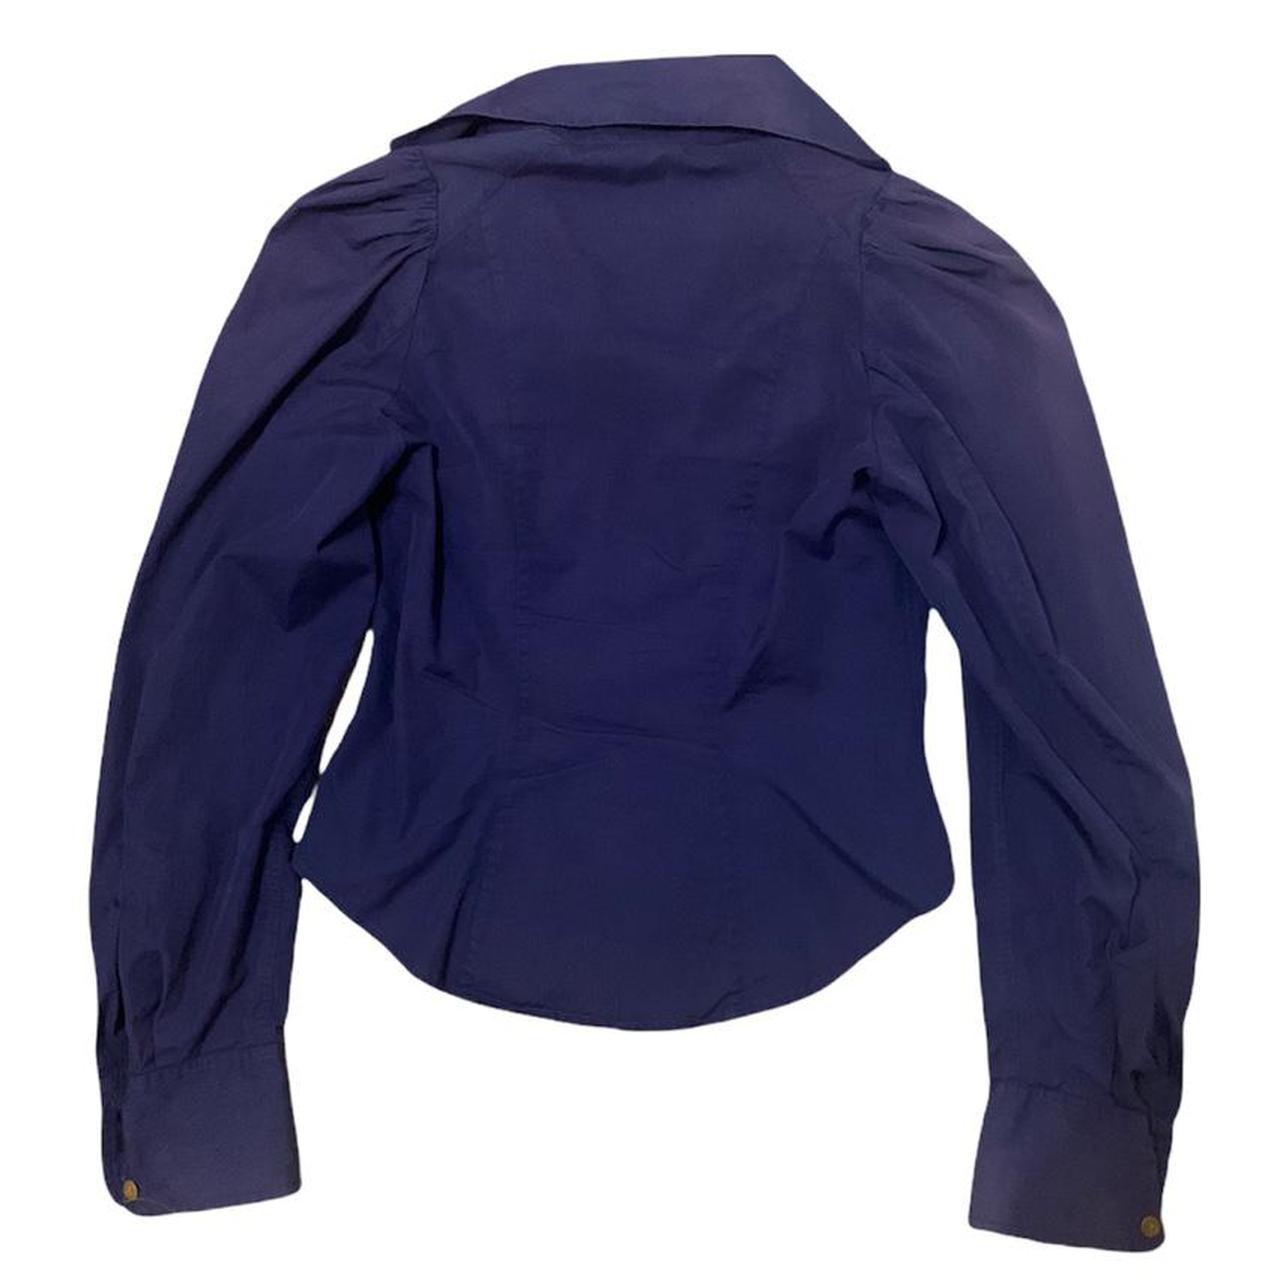 Product Image 2 - Vivienne Westwood Navy Blue Blazer

Size